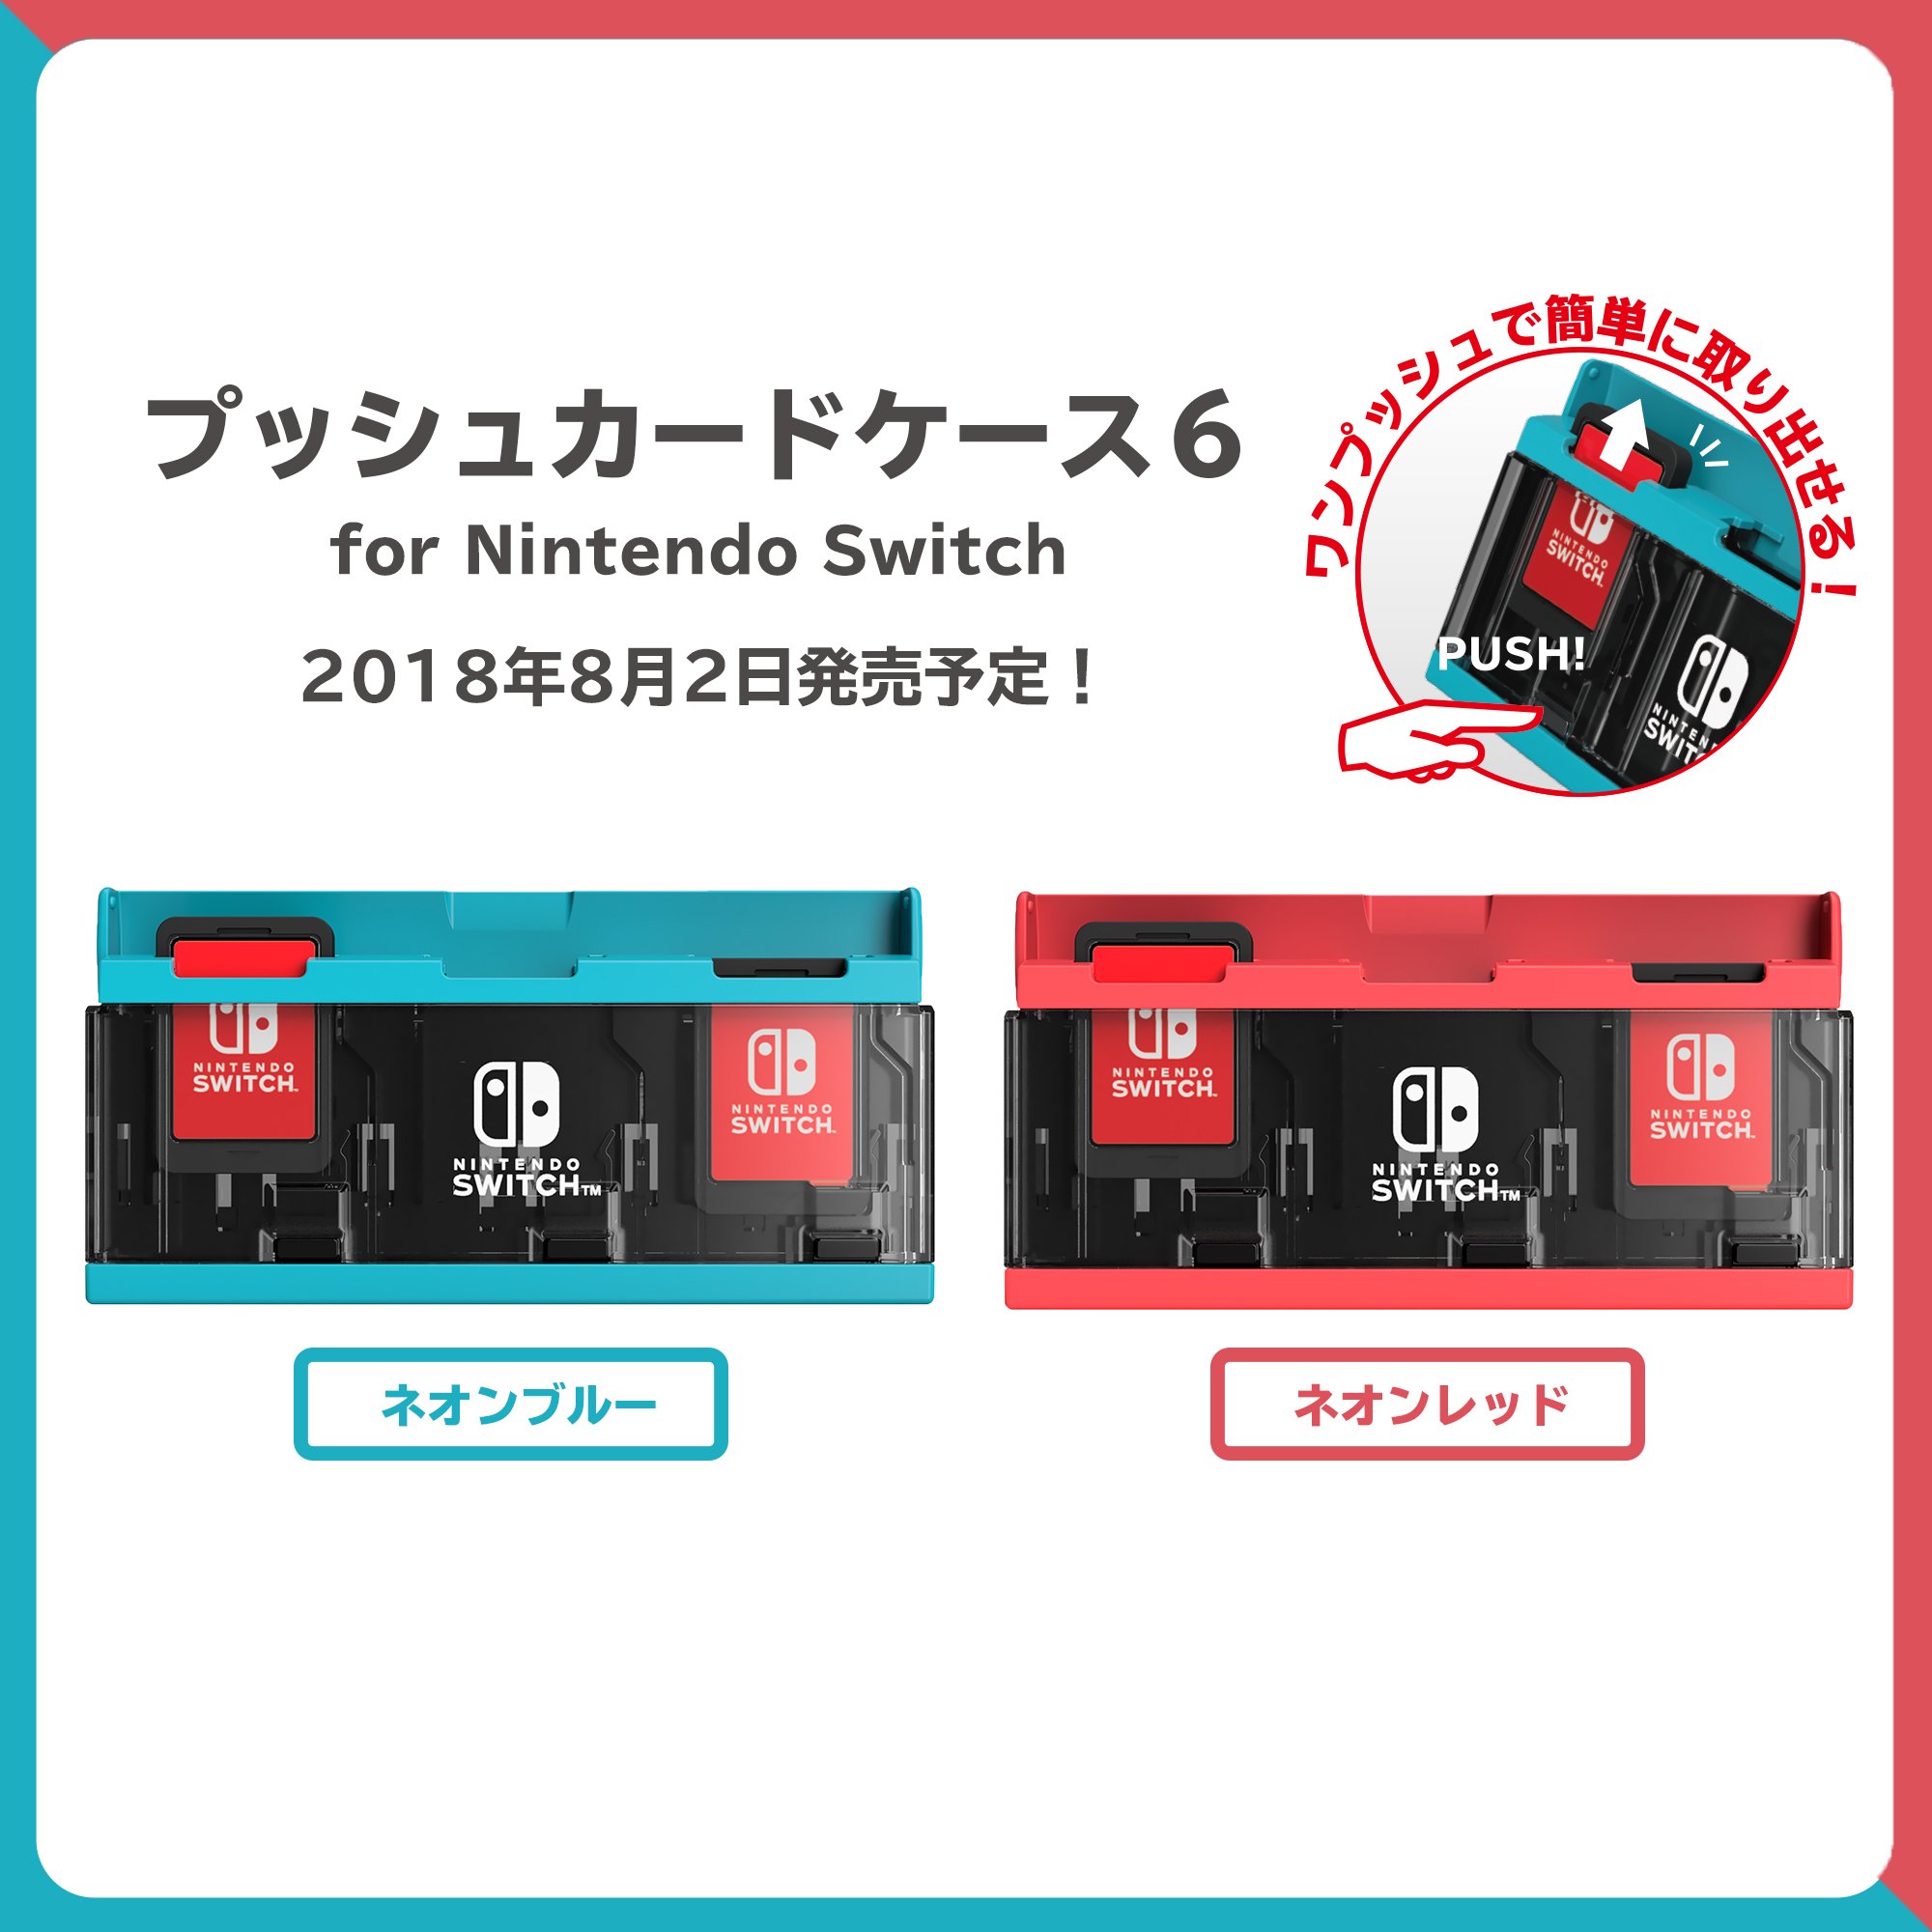 HORI /ゲーム周辺機器のホリ on Twitter: "【来週発売】「プッシュカードケース6 for Nintendo Switch